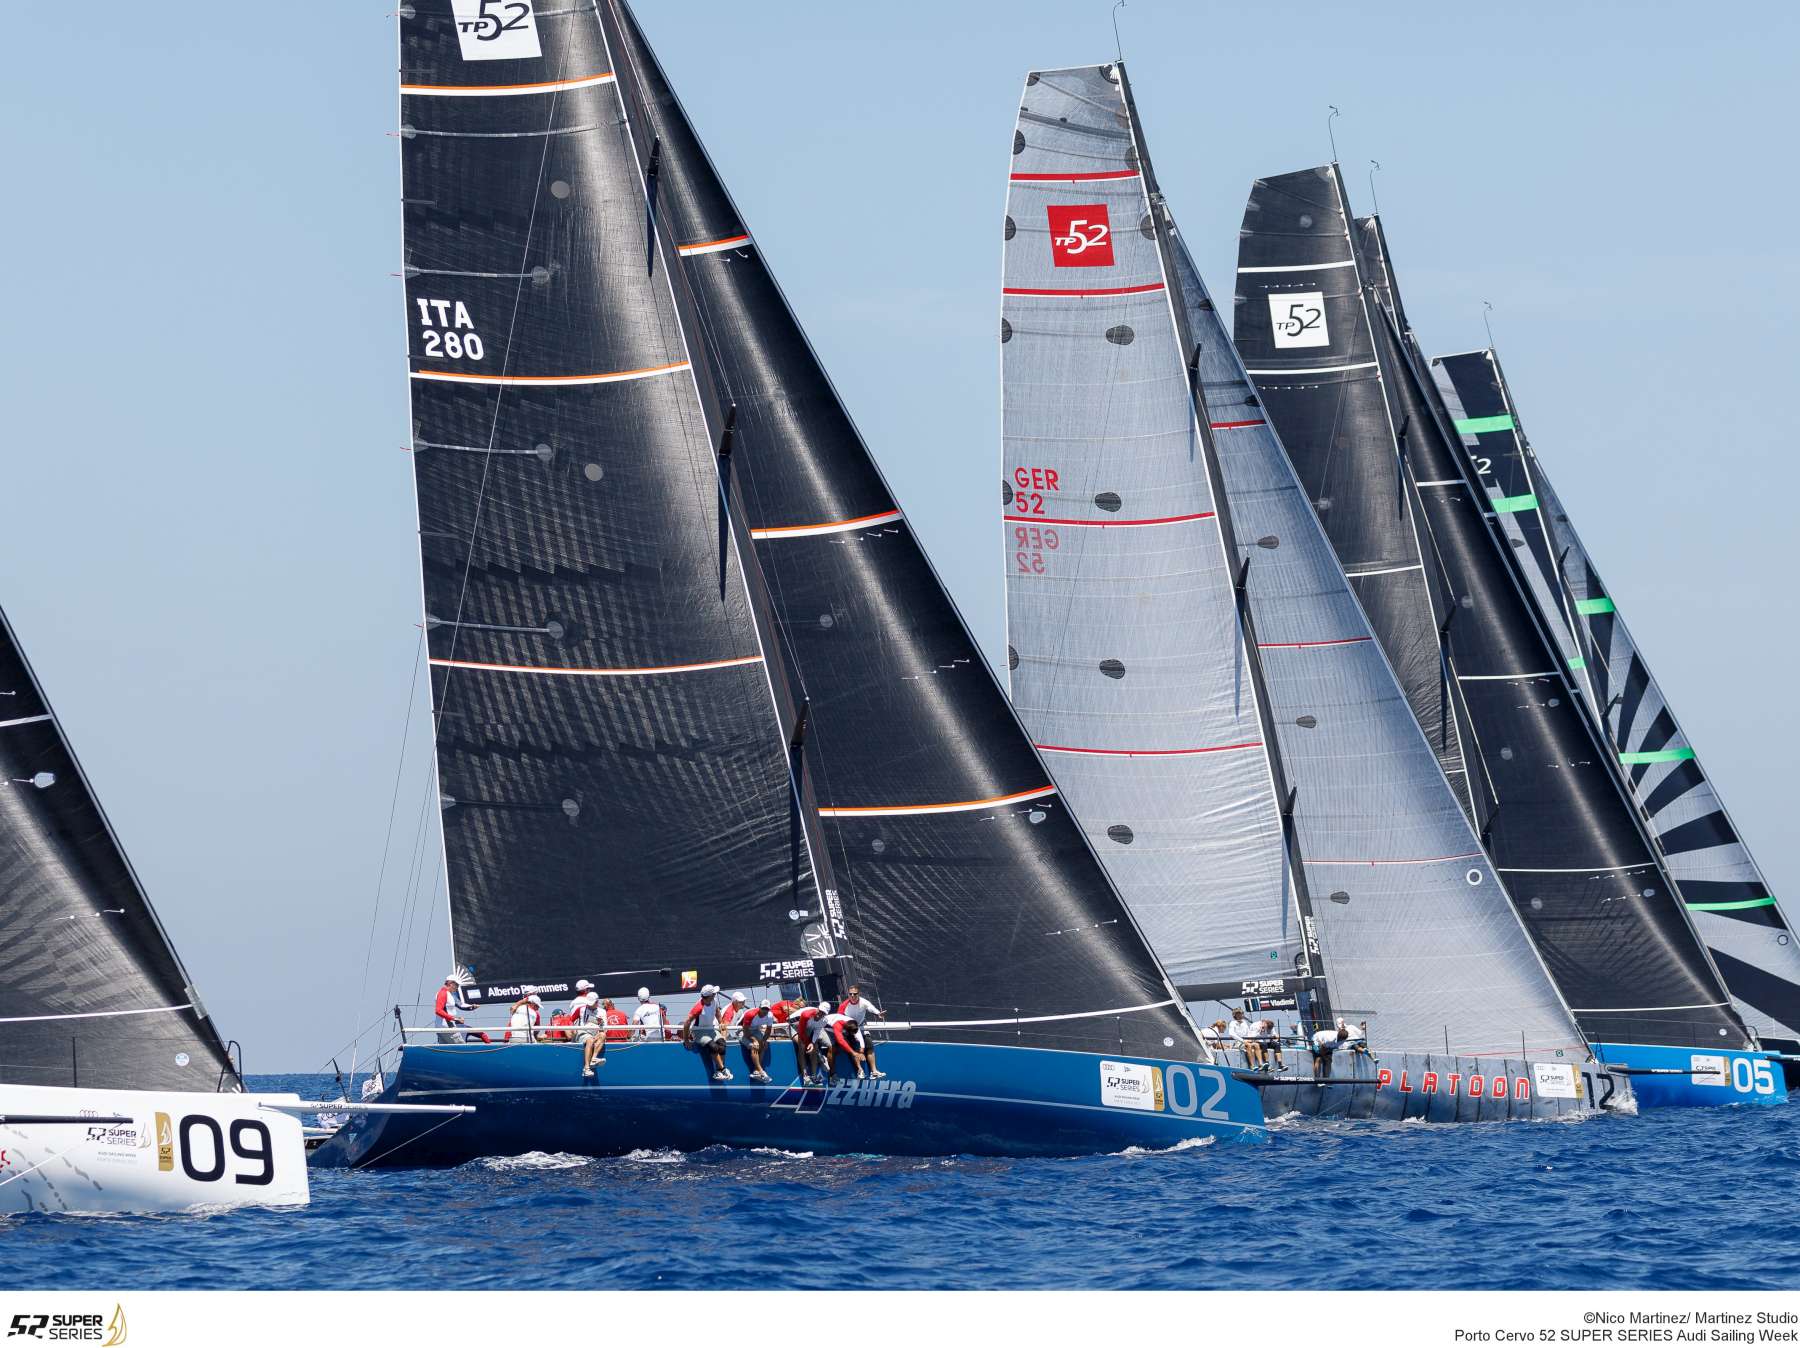 Audi Sailing Week, 52 Super Series -  Foto race Day 1 online  - NEWS - Yacht Club Costa Smeralda